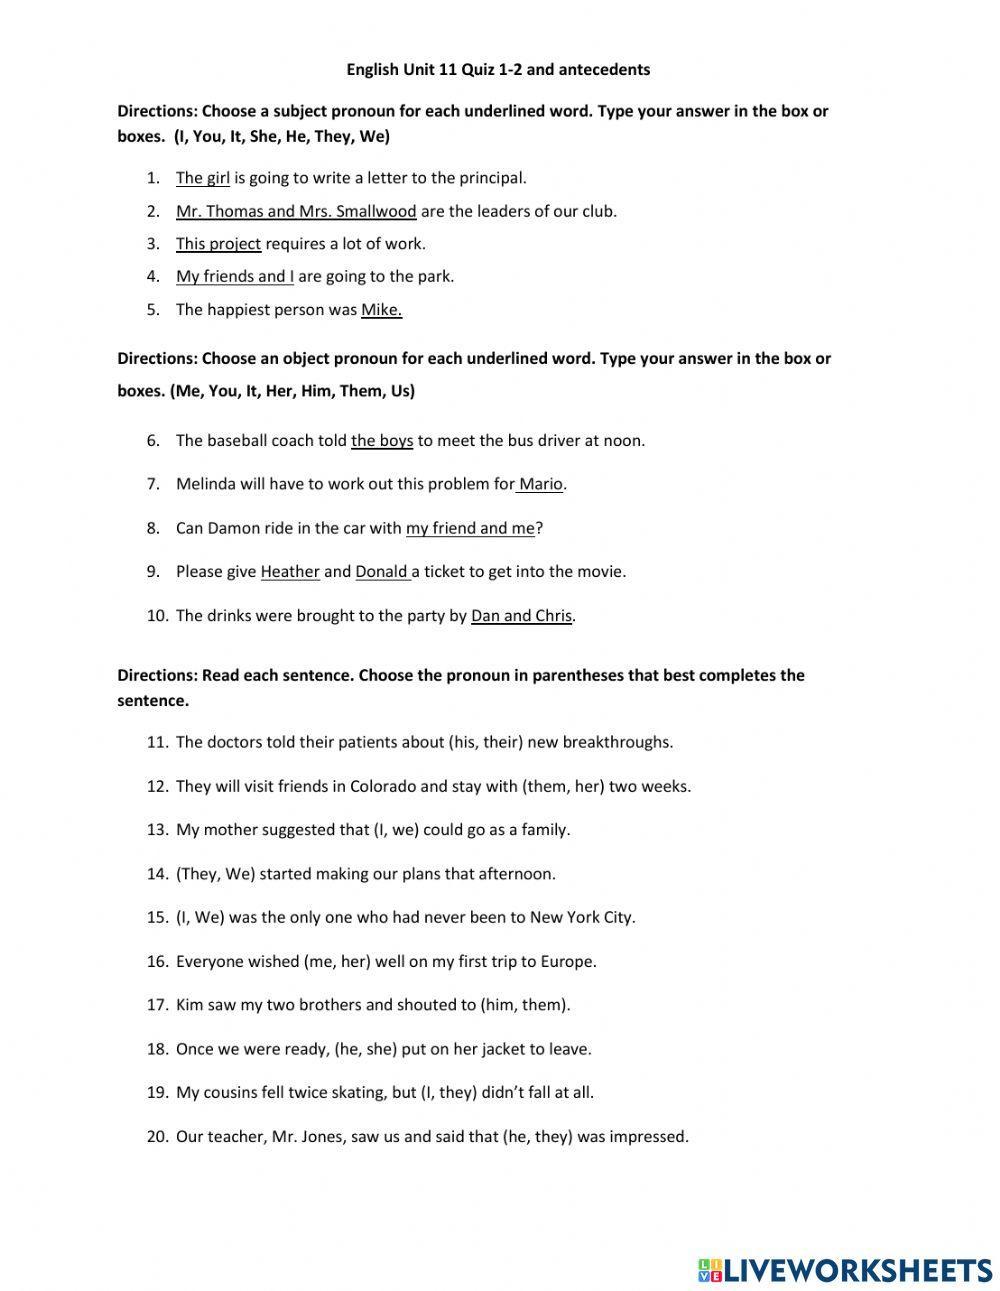 Unit 11 Lessons 1, 2, and antecedents quiz